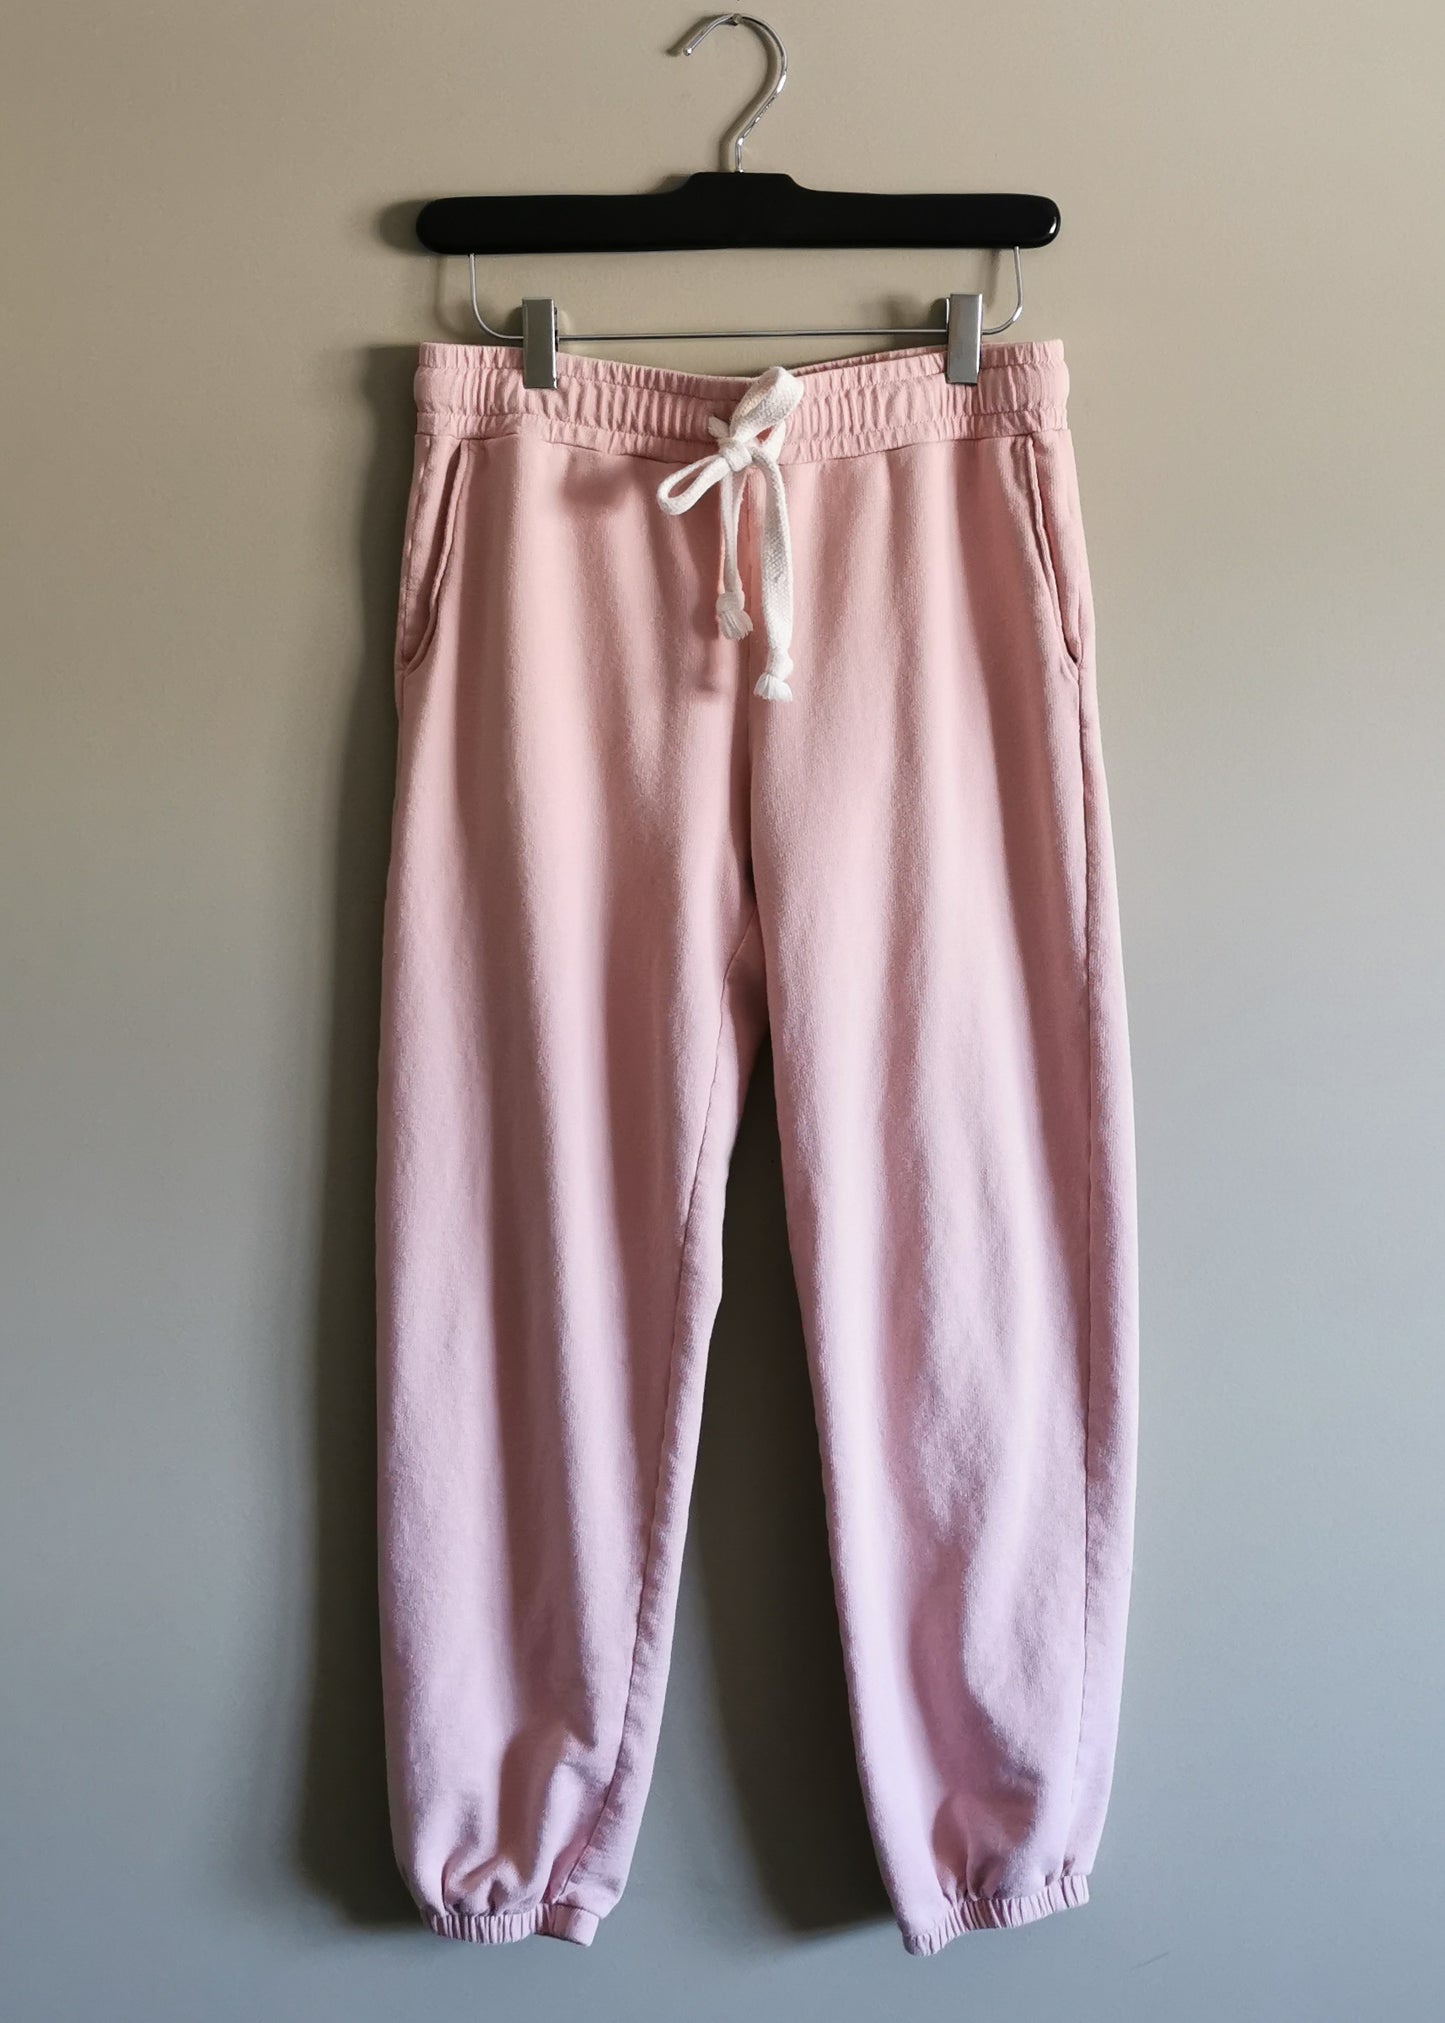 Madewell Cotton Sweatpants (S)